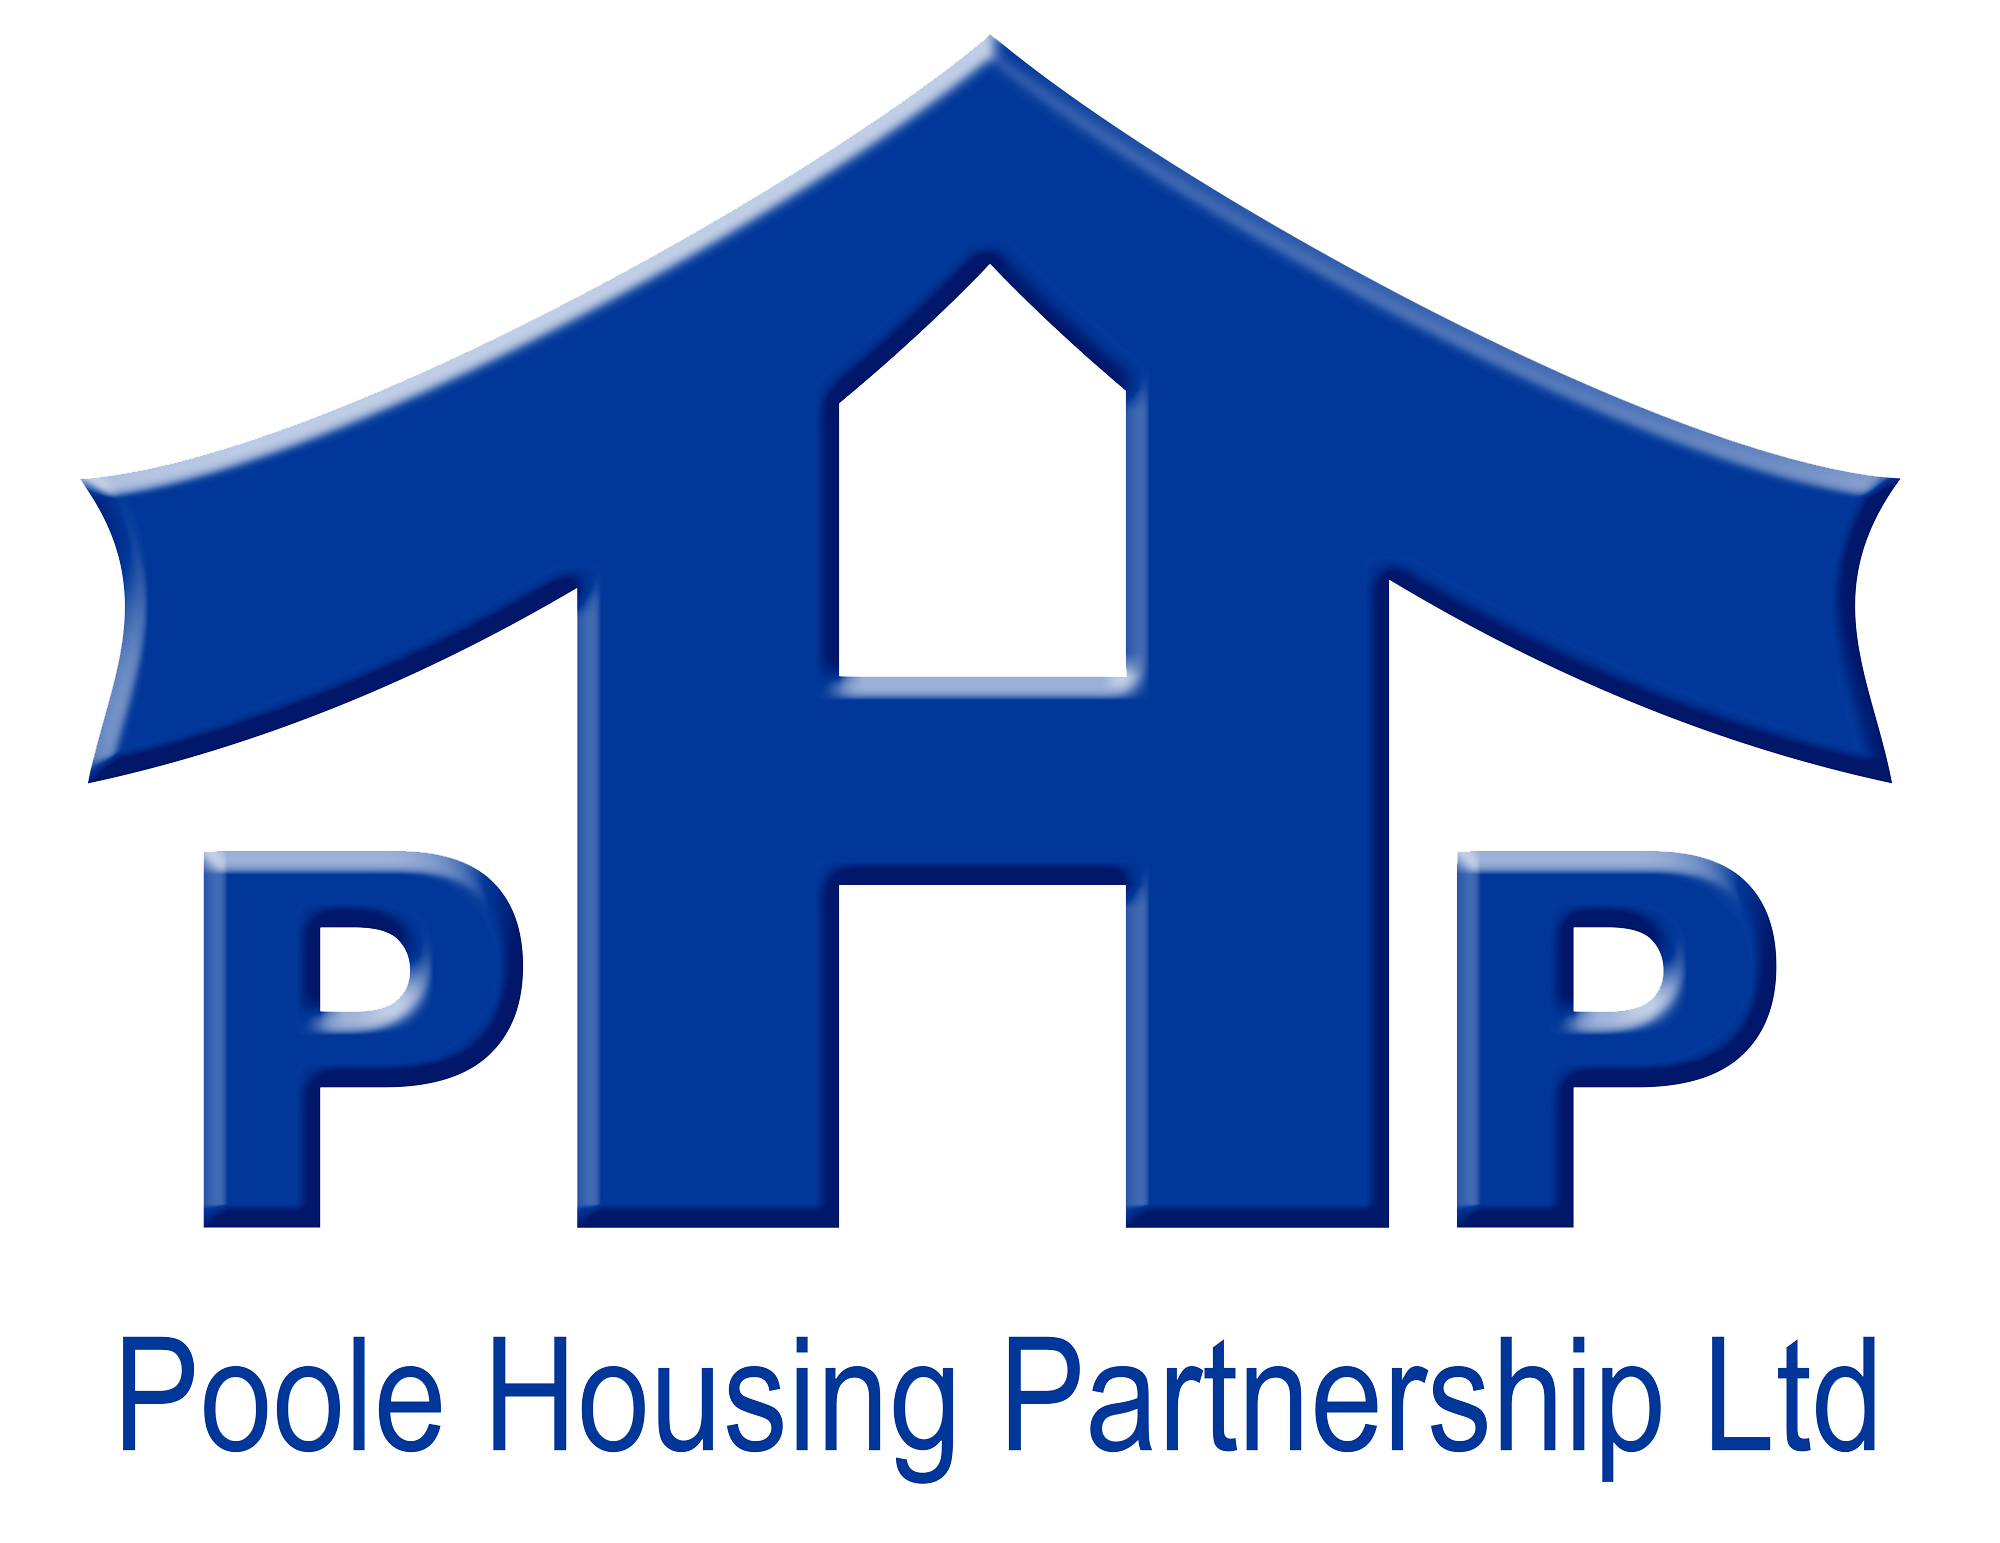 Poole Housing Partnership Ltd